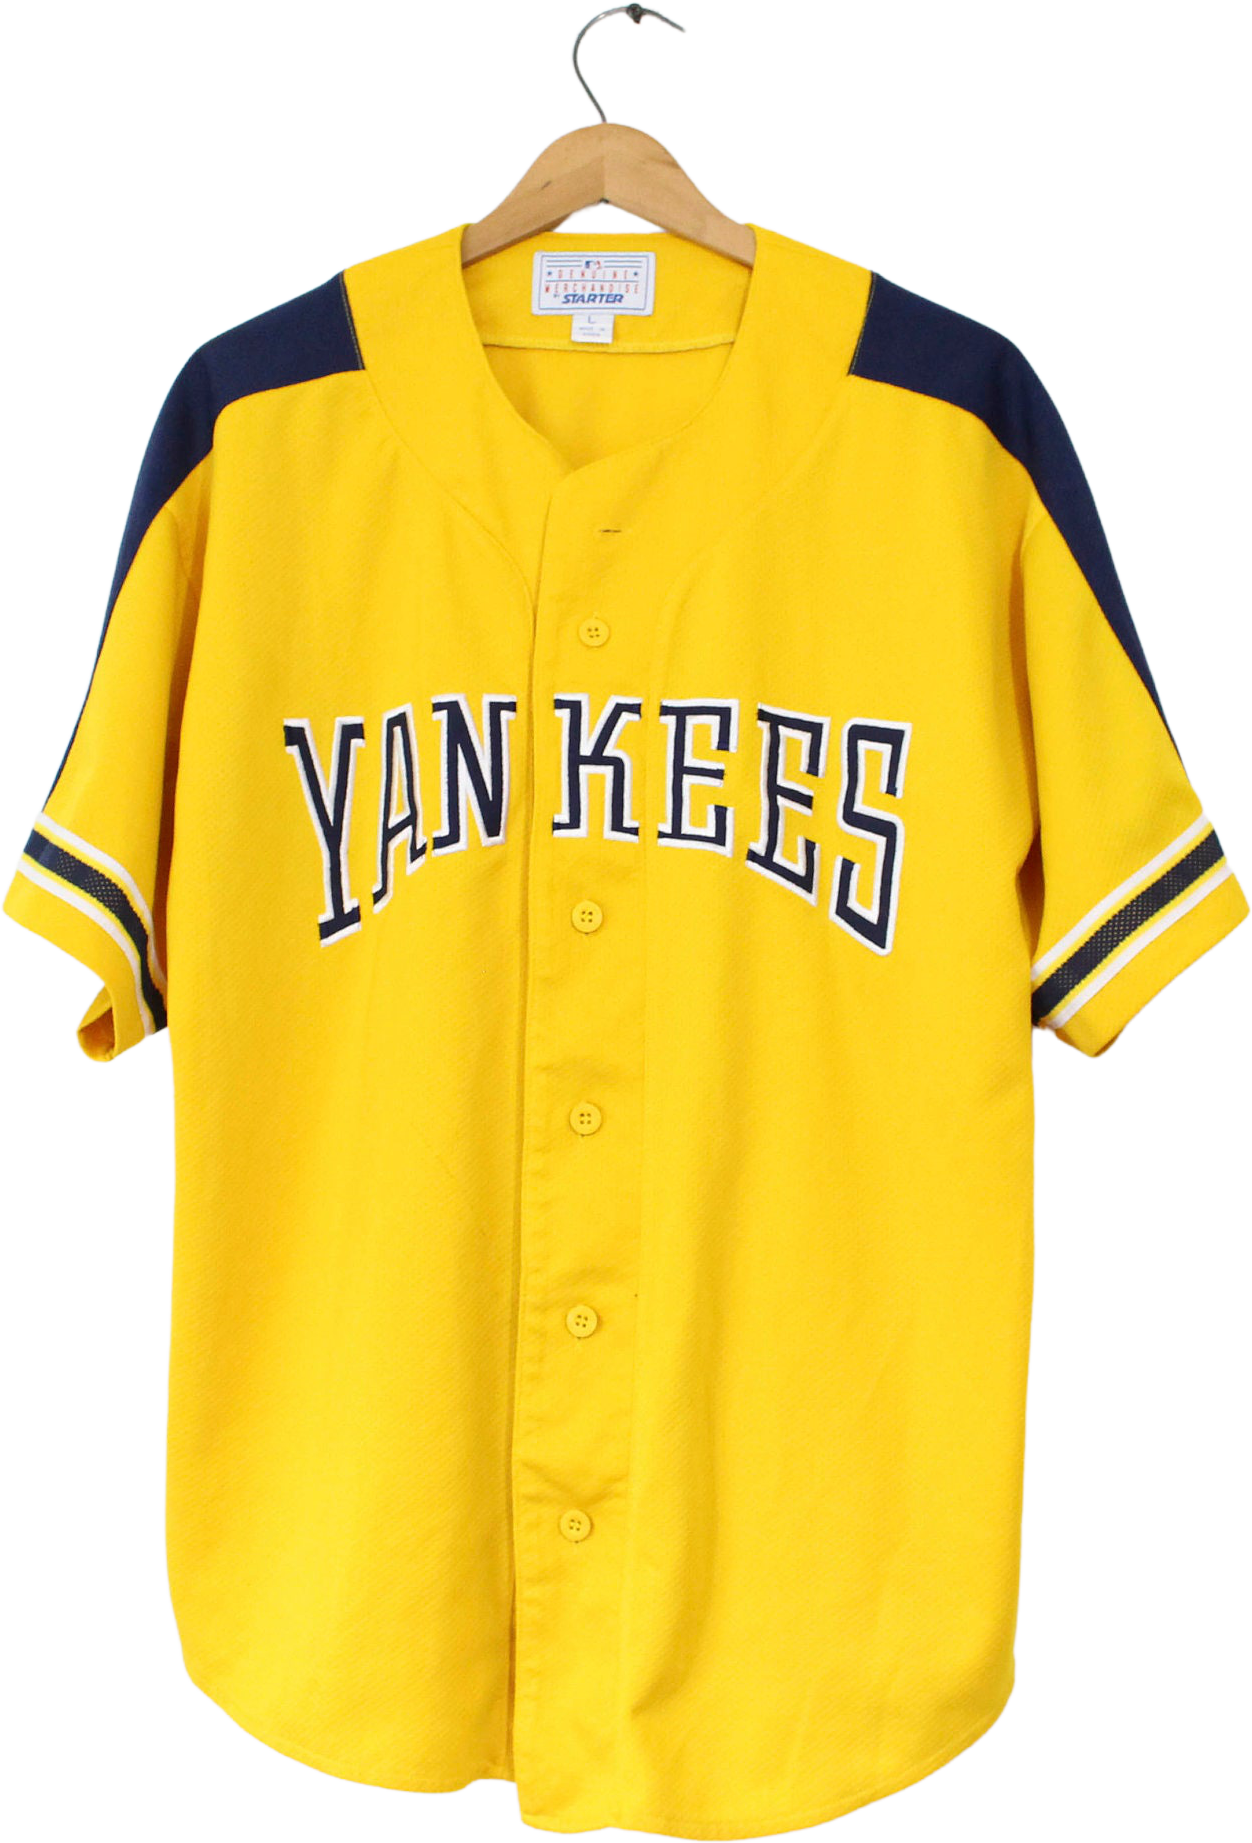 New York Yankees Baseball Yellow Jersey by Starter